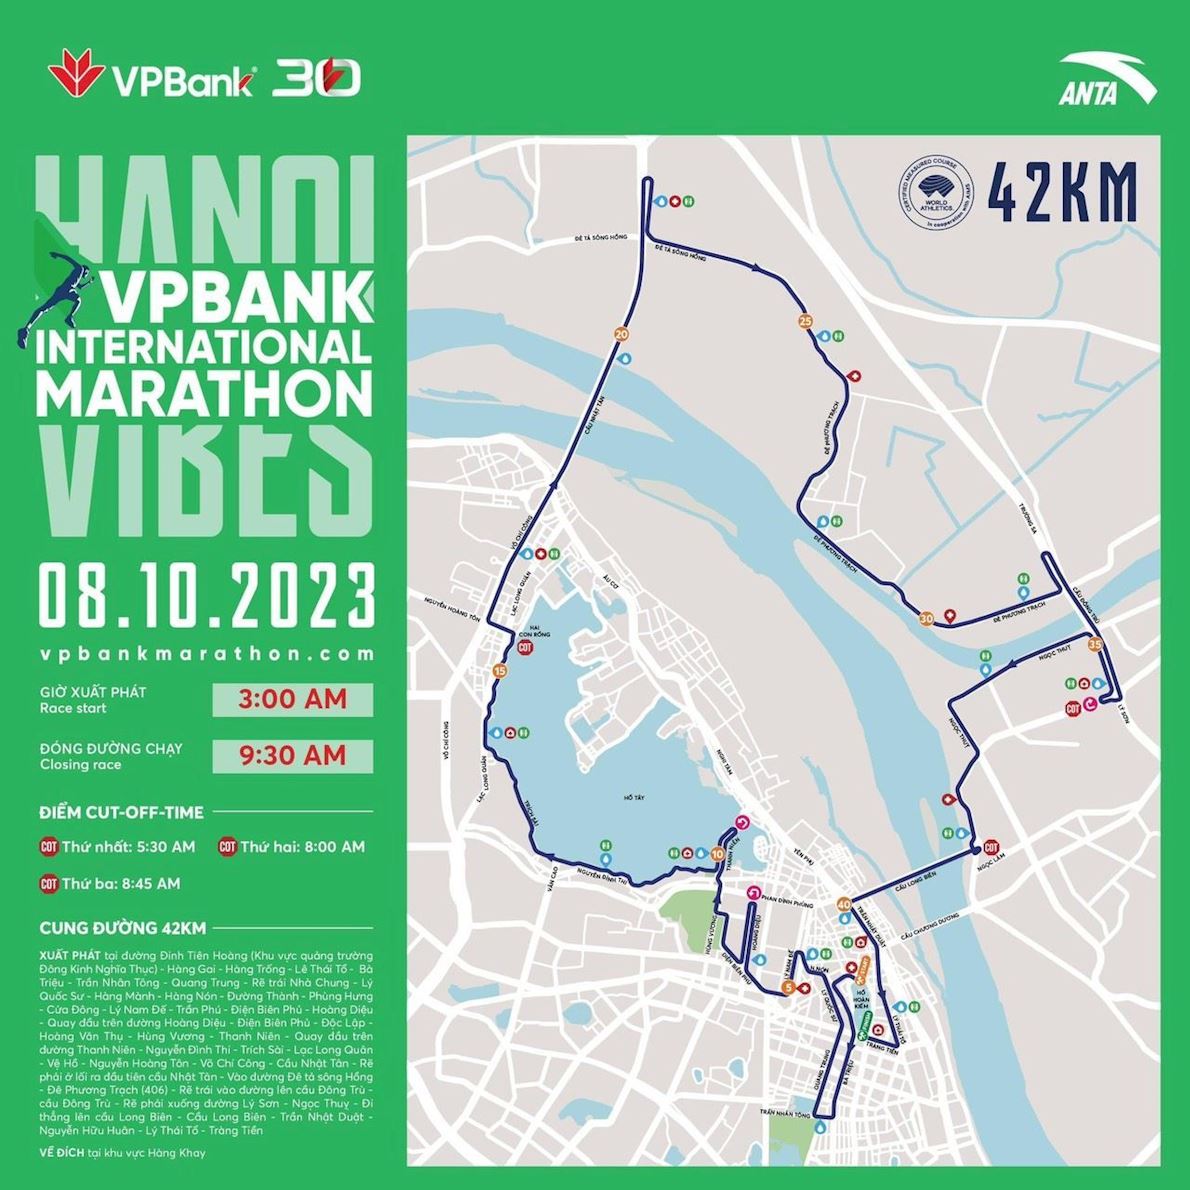 VPBank Hanoi International Marathon ITINERAIRE